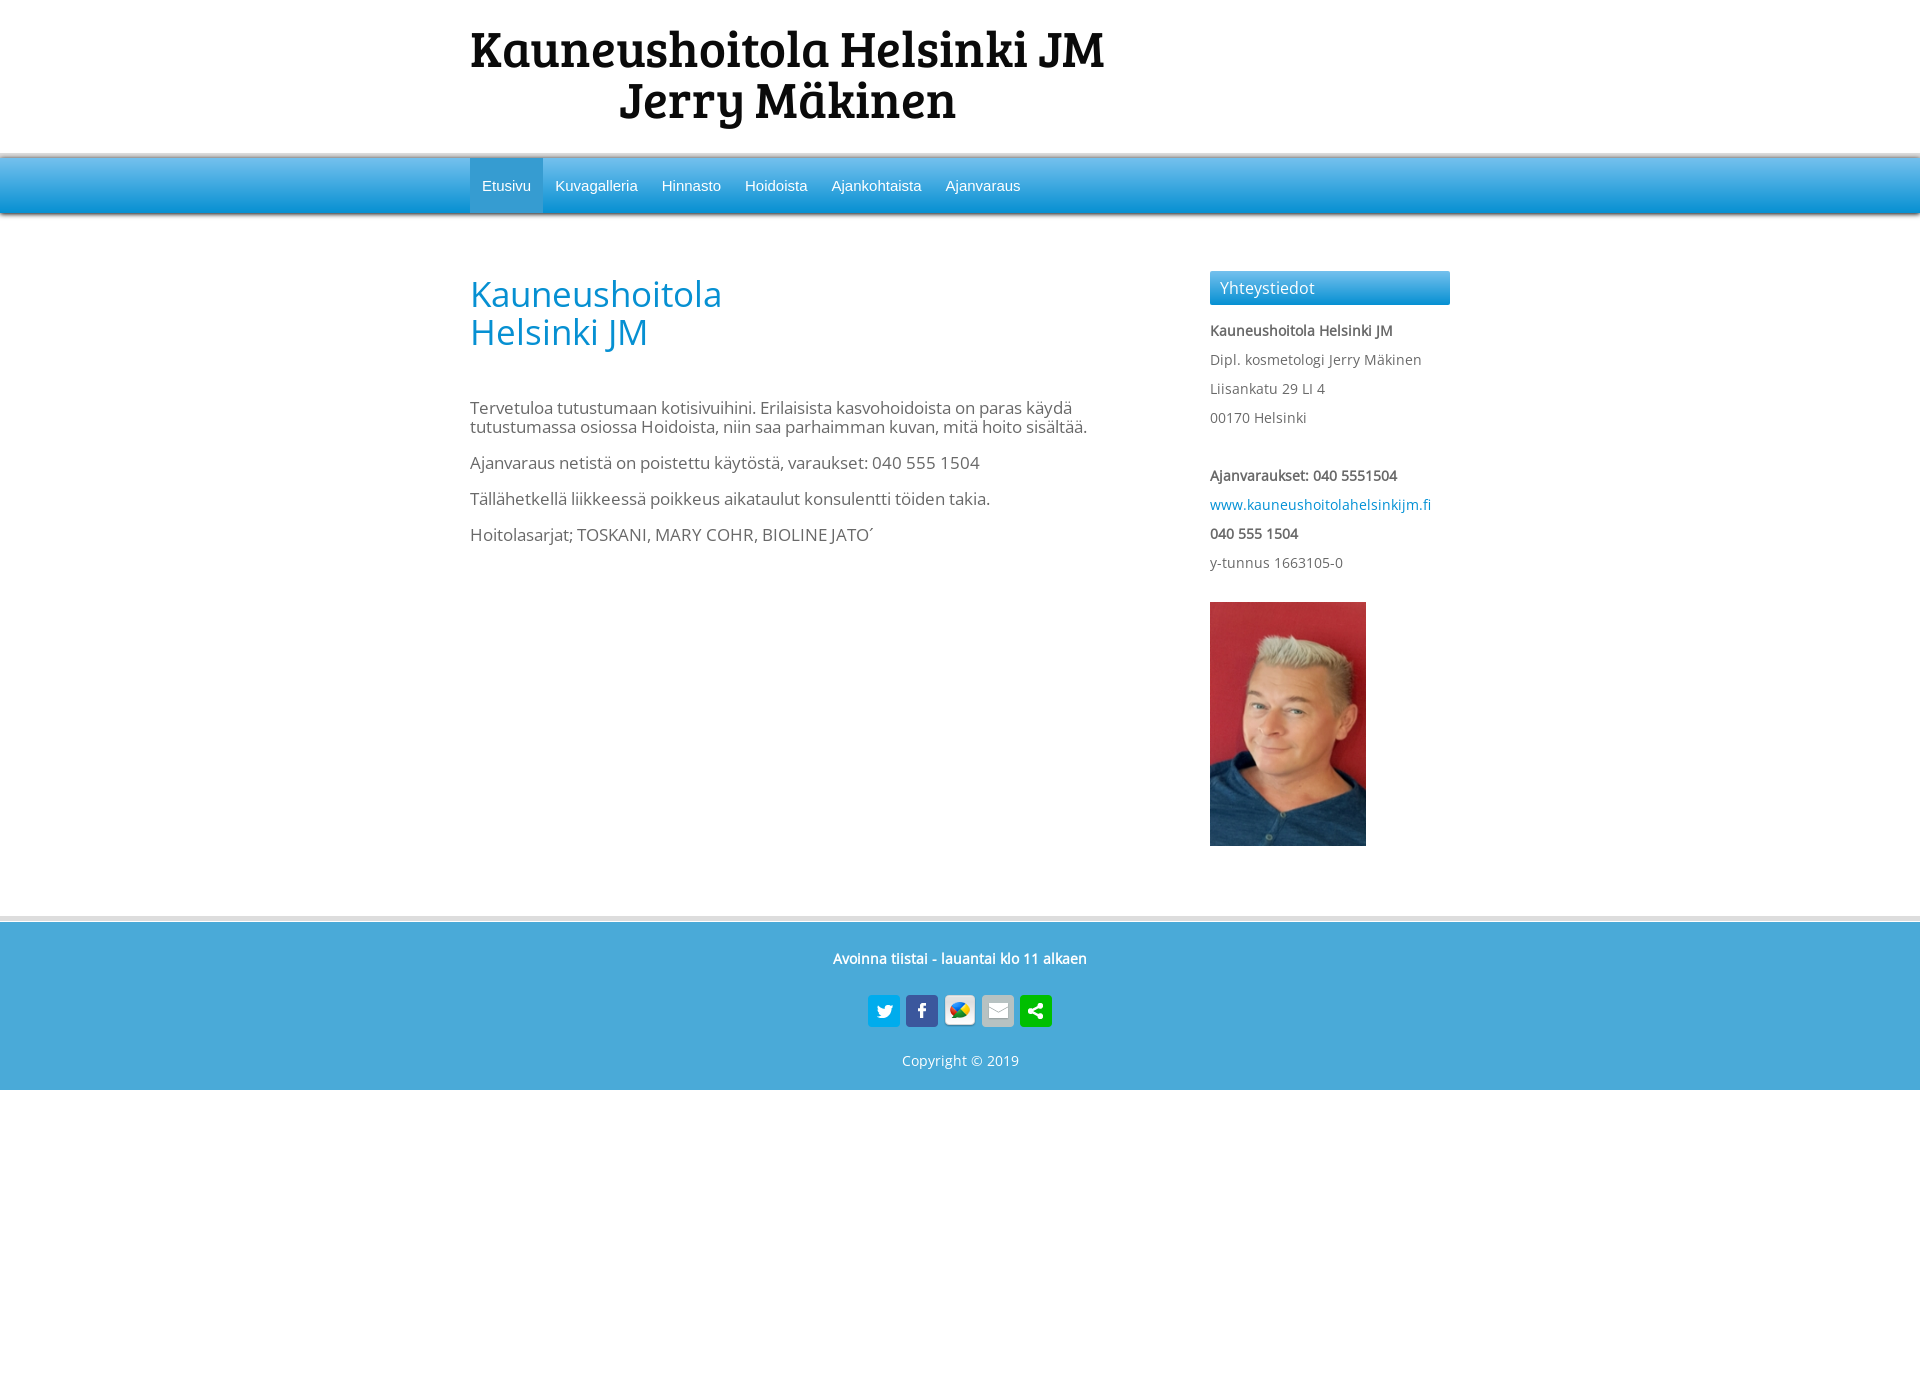 Skärmdump för kauneushoitolahelsinkijm.fi